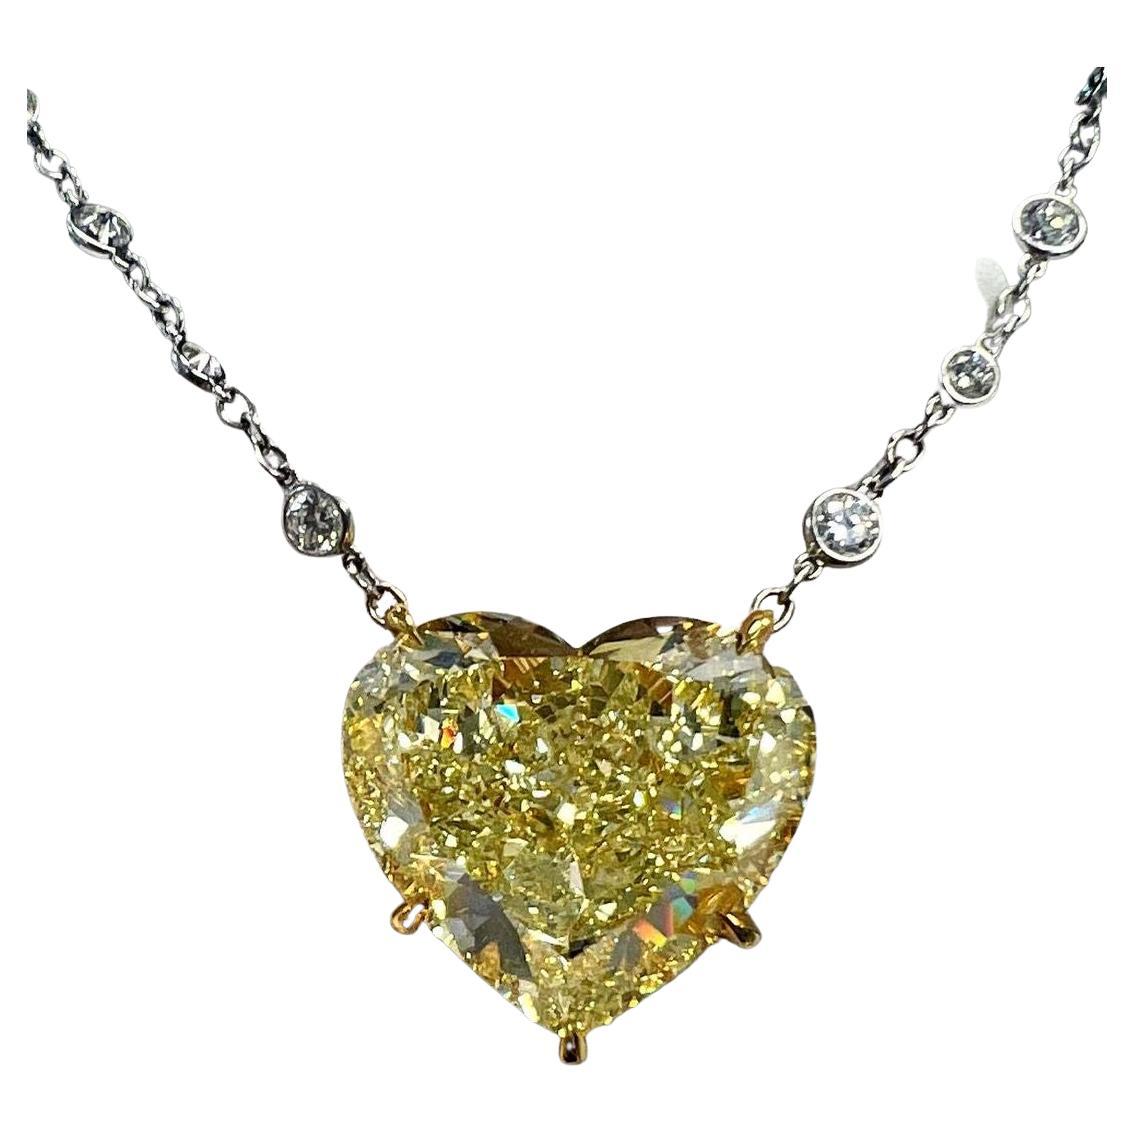 An exquisite 9 carat heart shape diamond pendant platinum necklace 

GIA Certified 10 Carat Heart Shape Fancy Light Yellow Diamond Pendant Necklace
